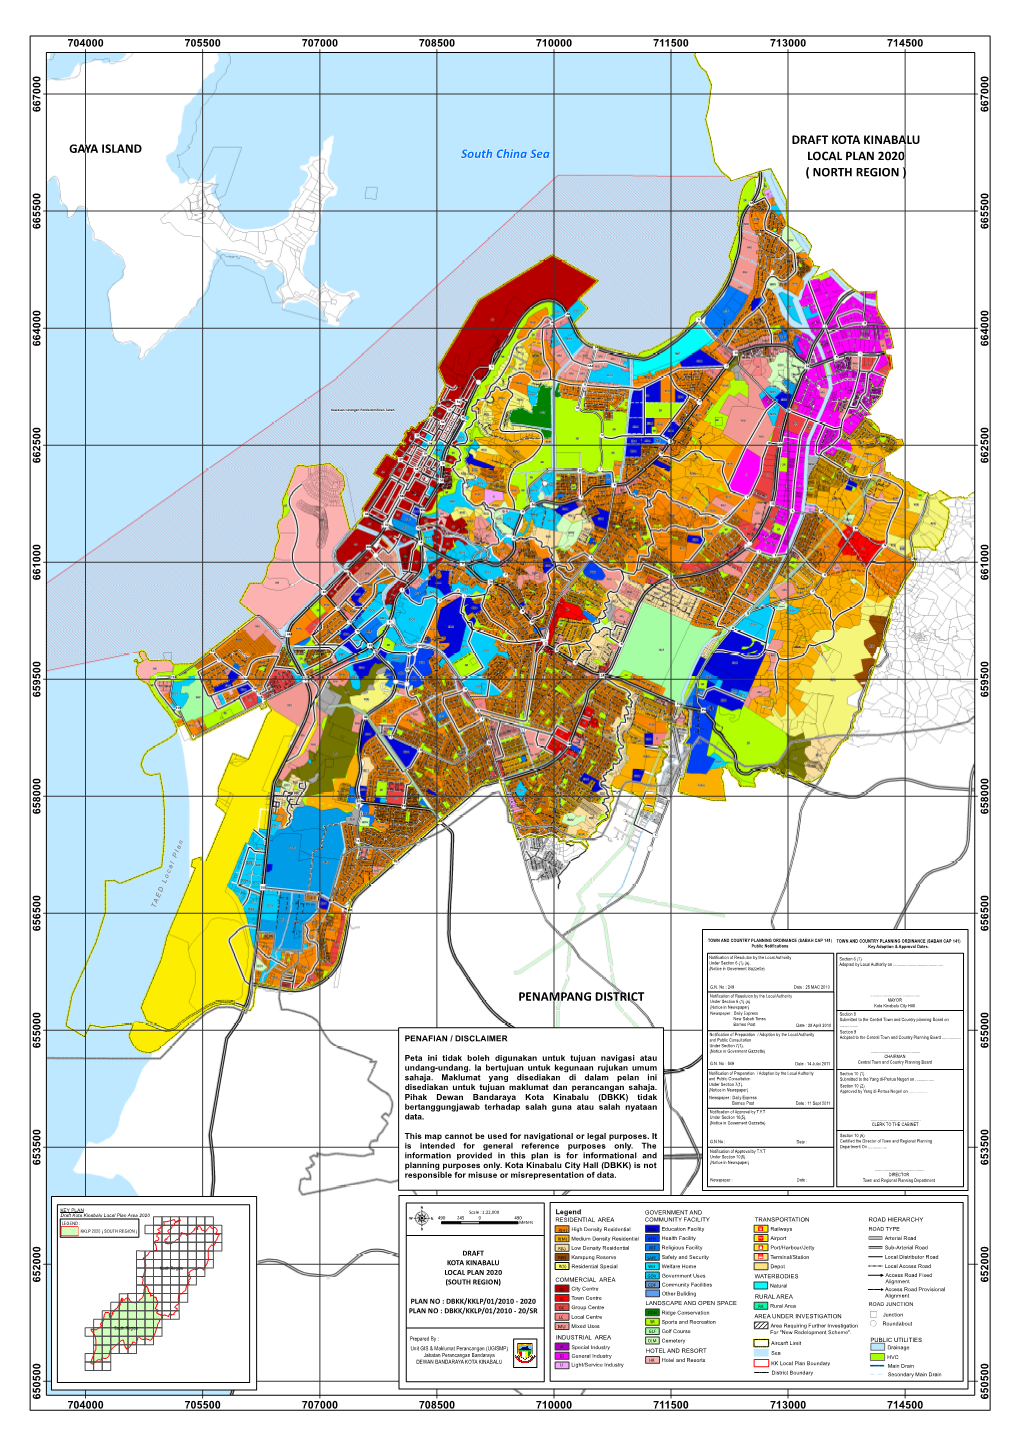 Draft Kota Kinabalu Local Plan 2020 ( North Region )